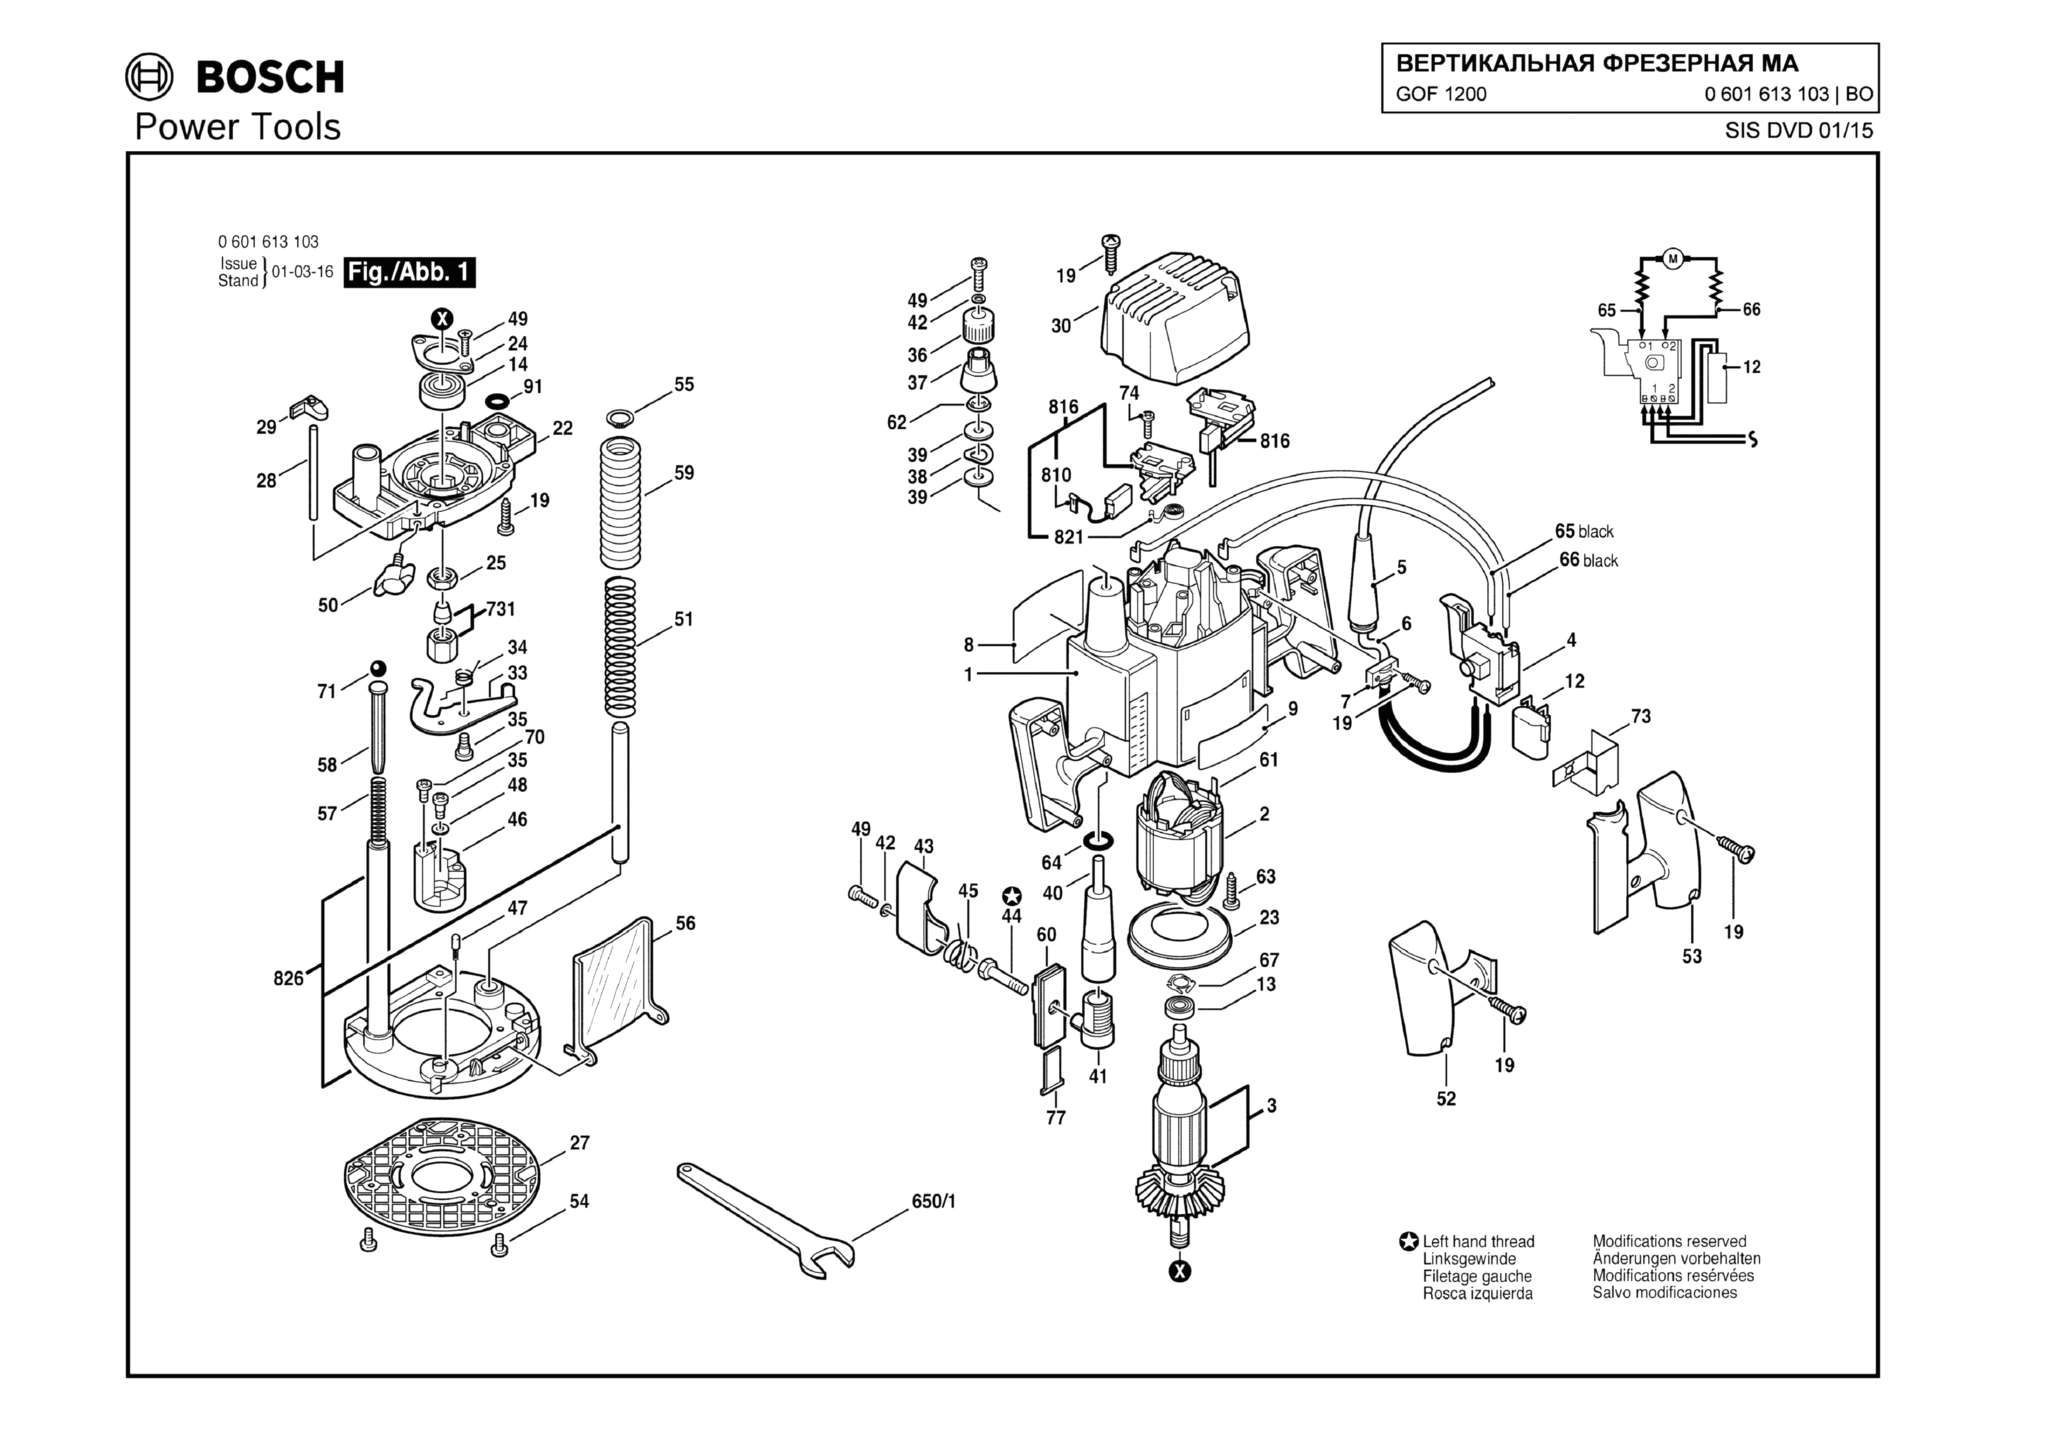 Запчасти, схема и деталировка Bosch GOF 1200 (ТИП 0601613103)